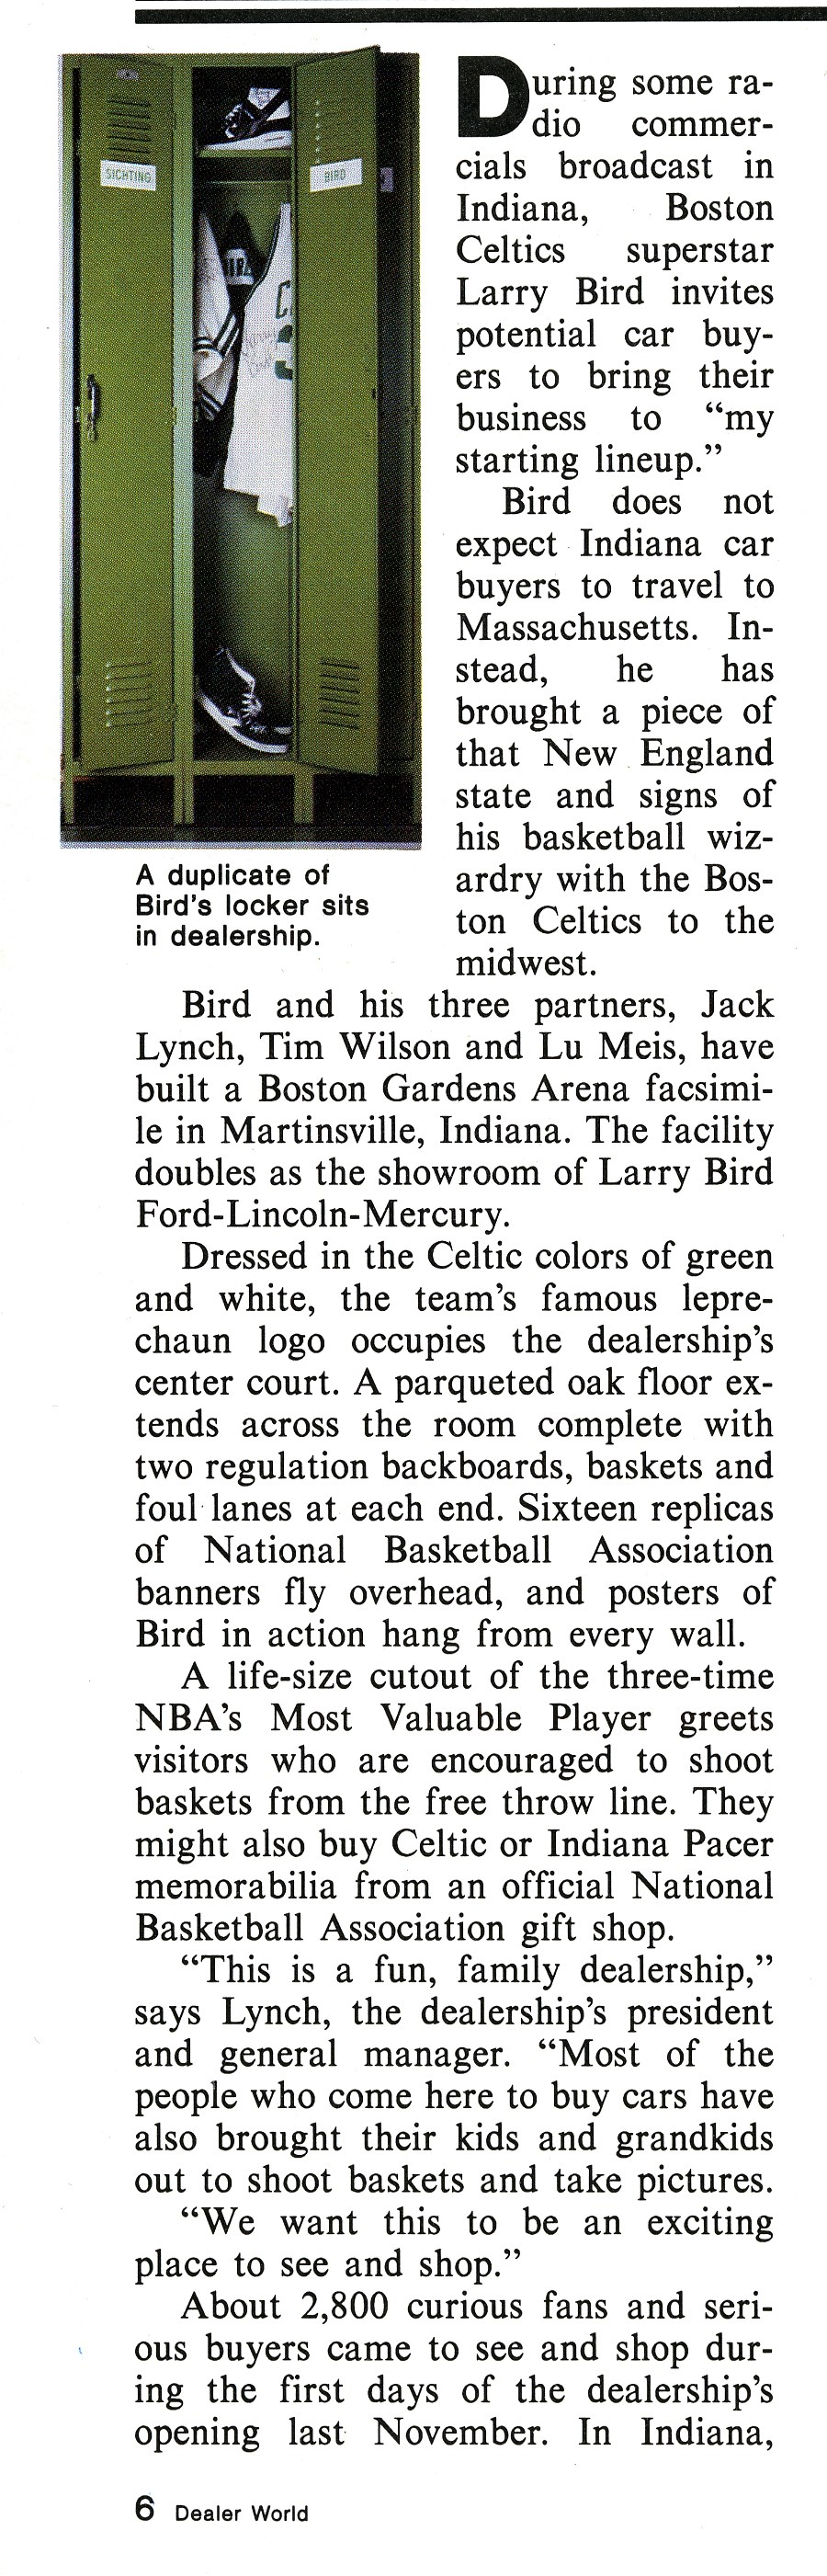 Larry Bird Signed Celtics Vintage Warm-Up Jacket (PSA)